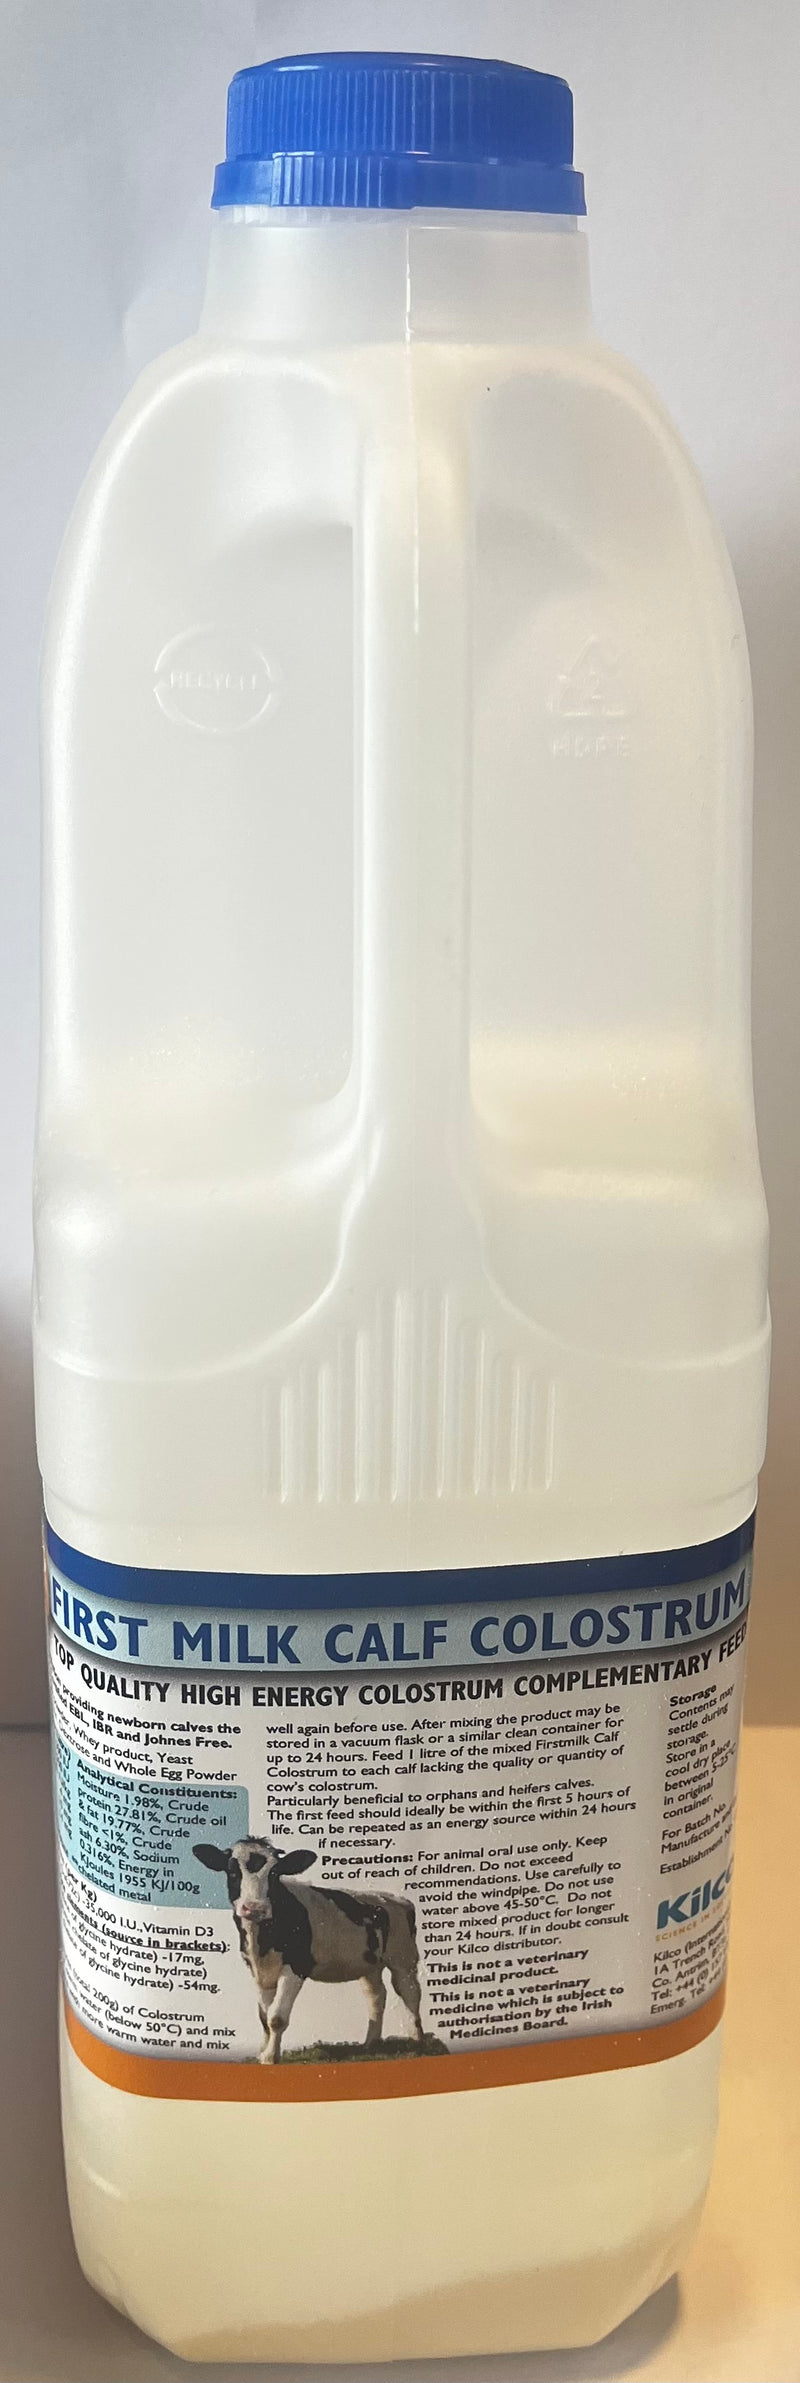 Kilco First Milk Calf Colostrum Powder 200g